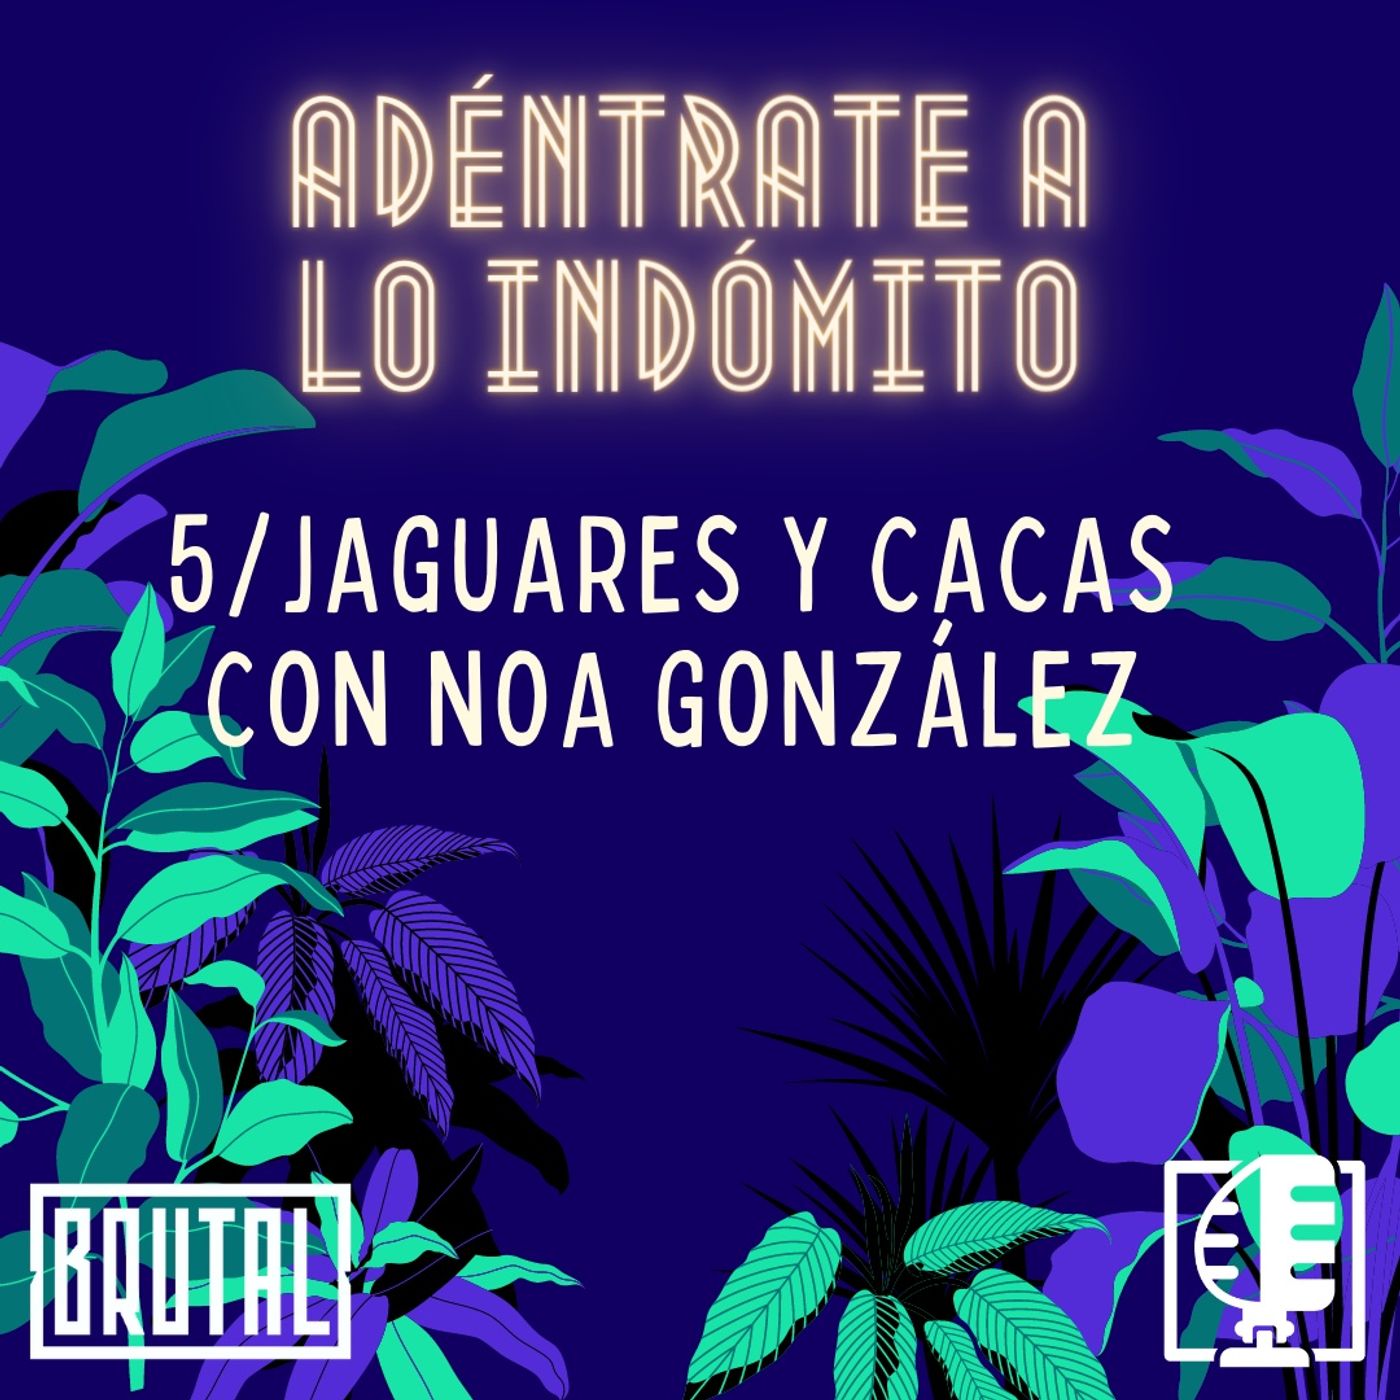 Jaguares y Cacas con Noa González | Adéntrate a lo indómito #05